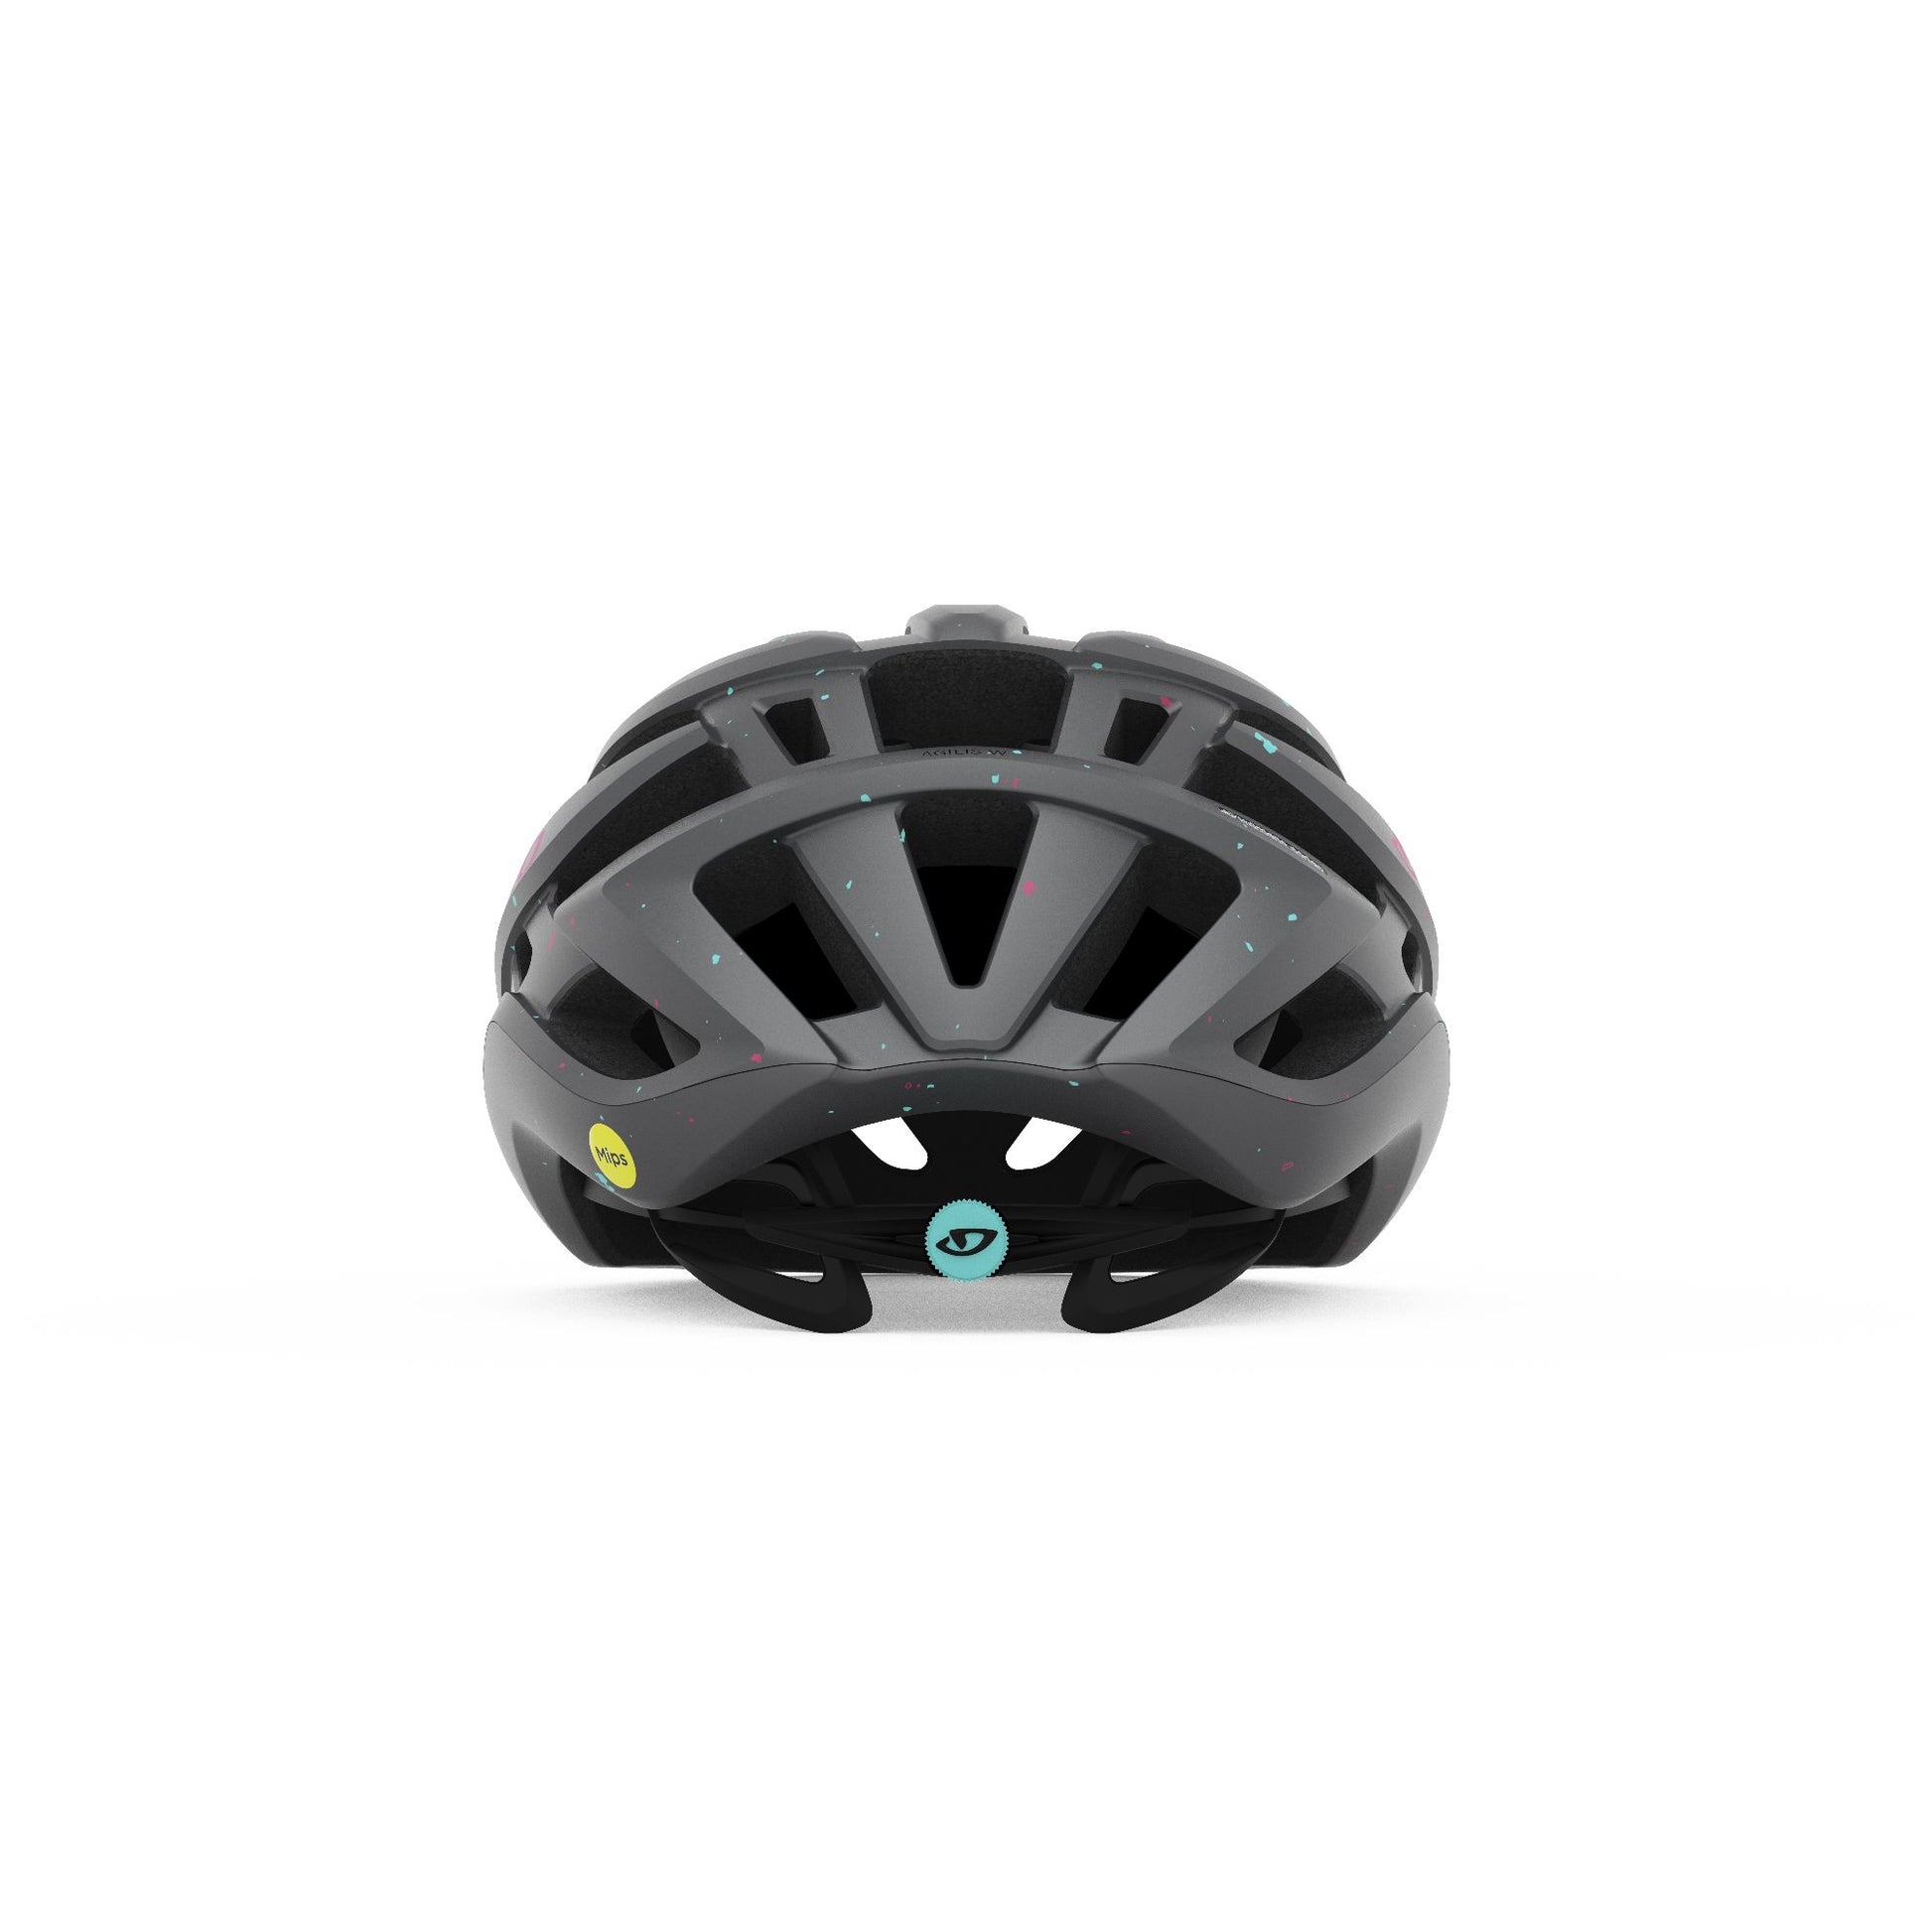 Giro Women's Agilis MIPS Helmet Matte Charcoal Mica Bike Helmets